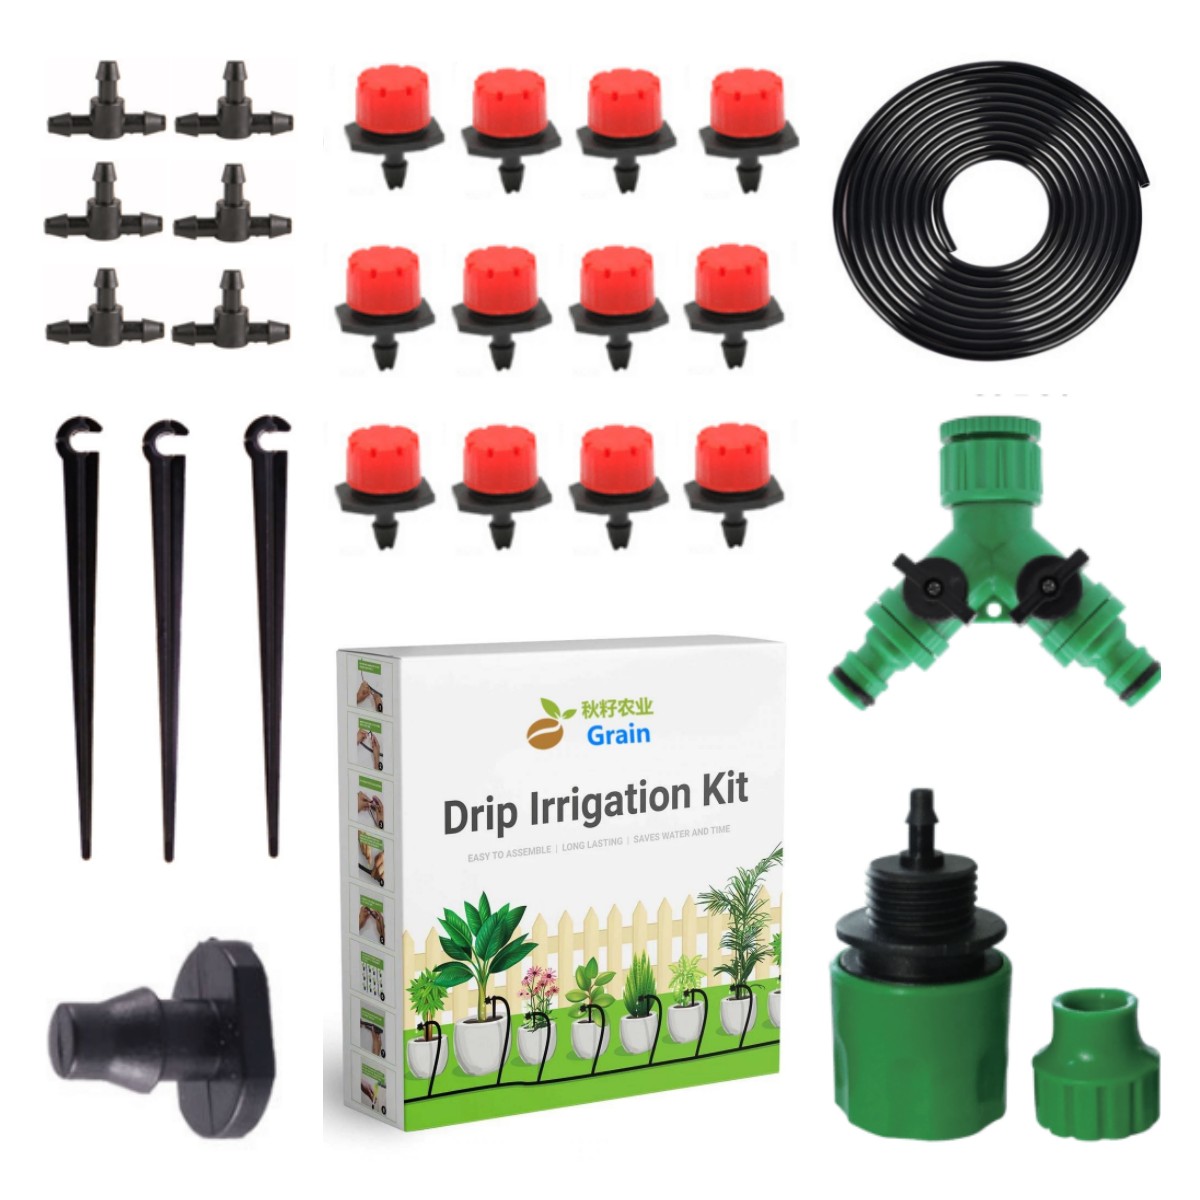 Gardening drip irrigation set